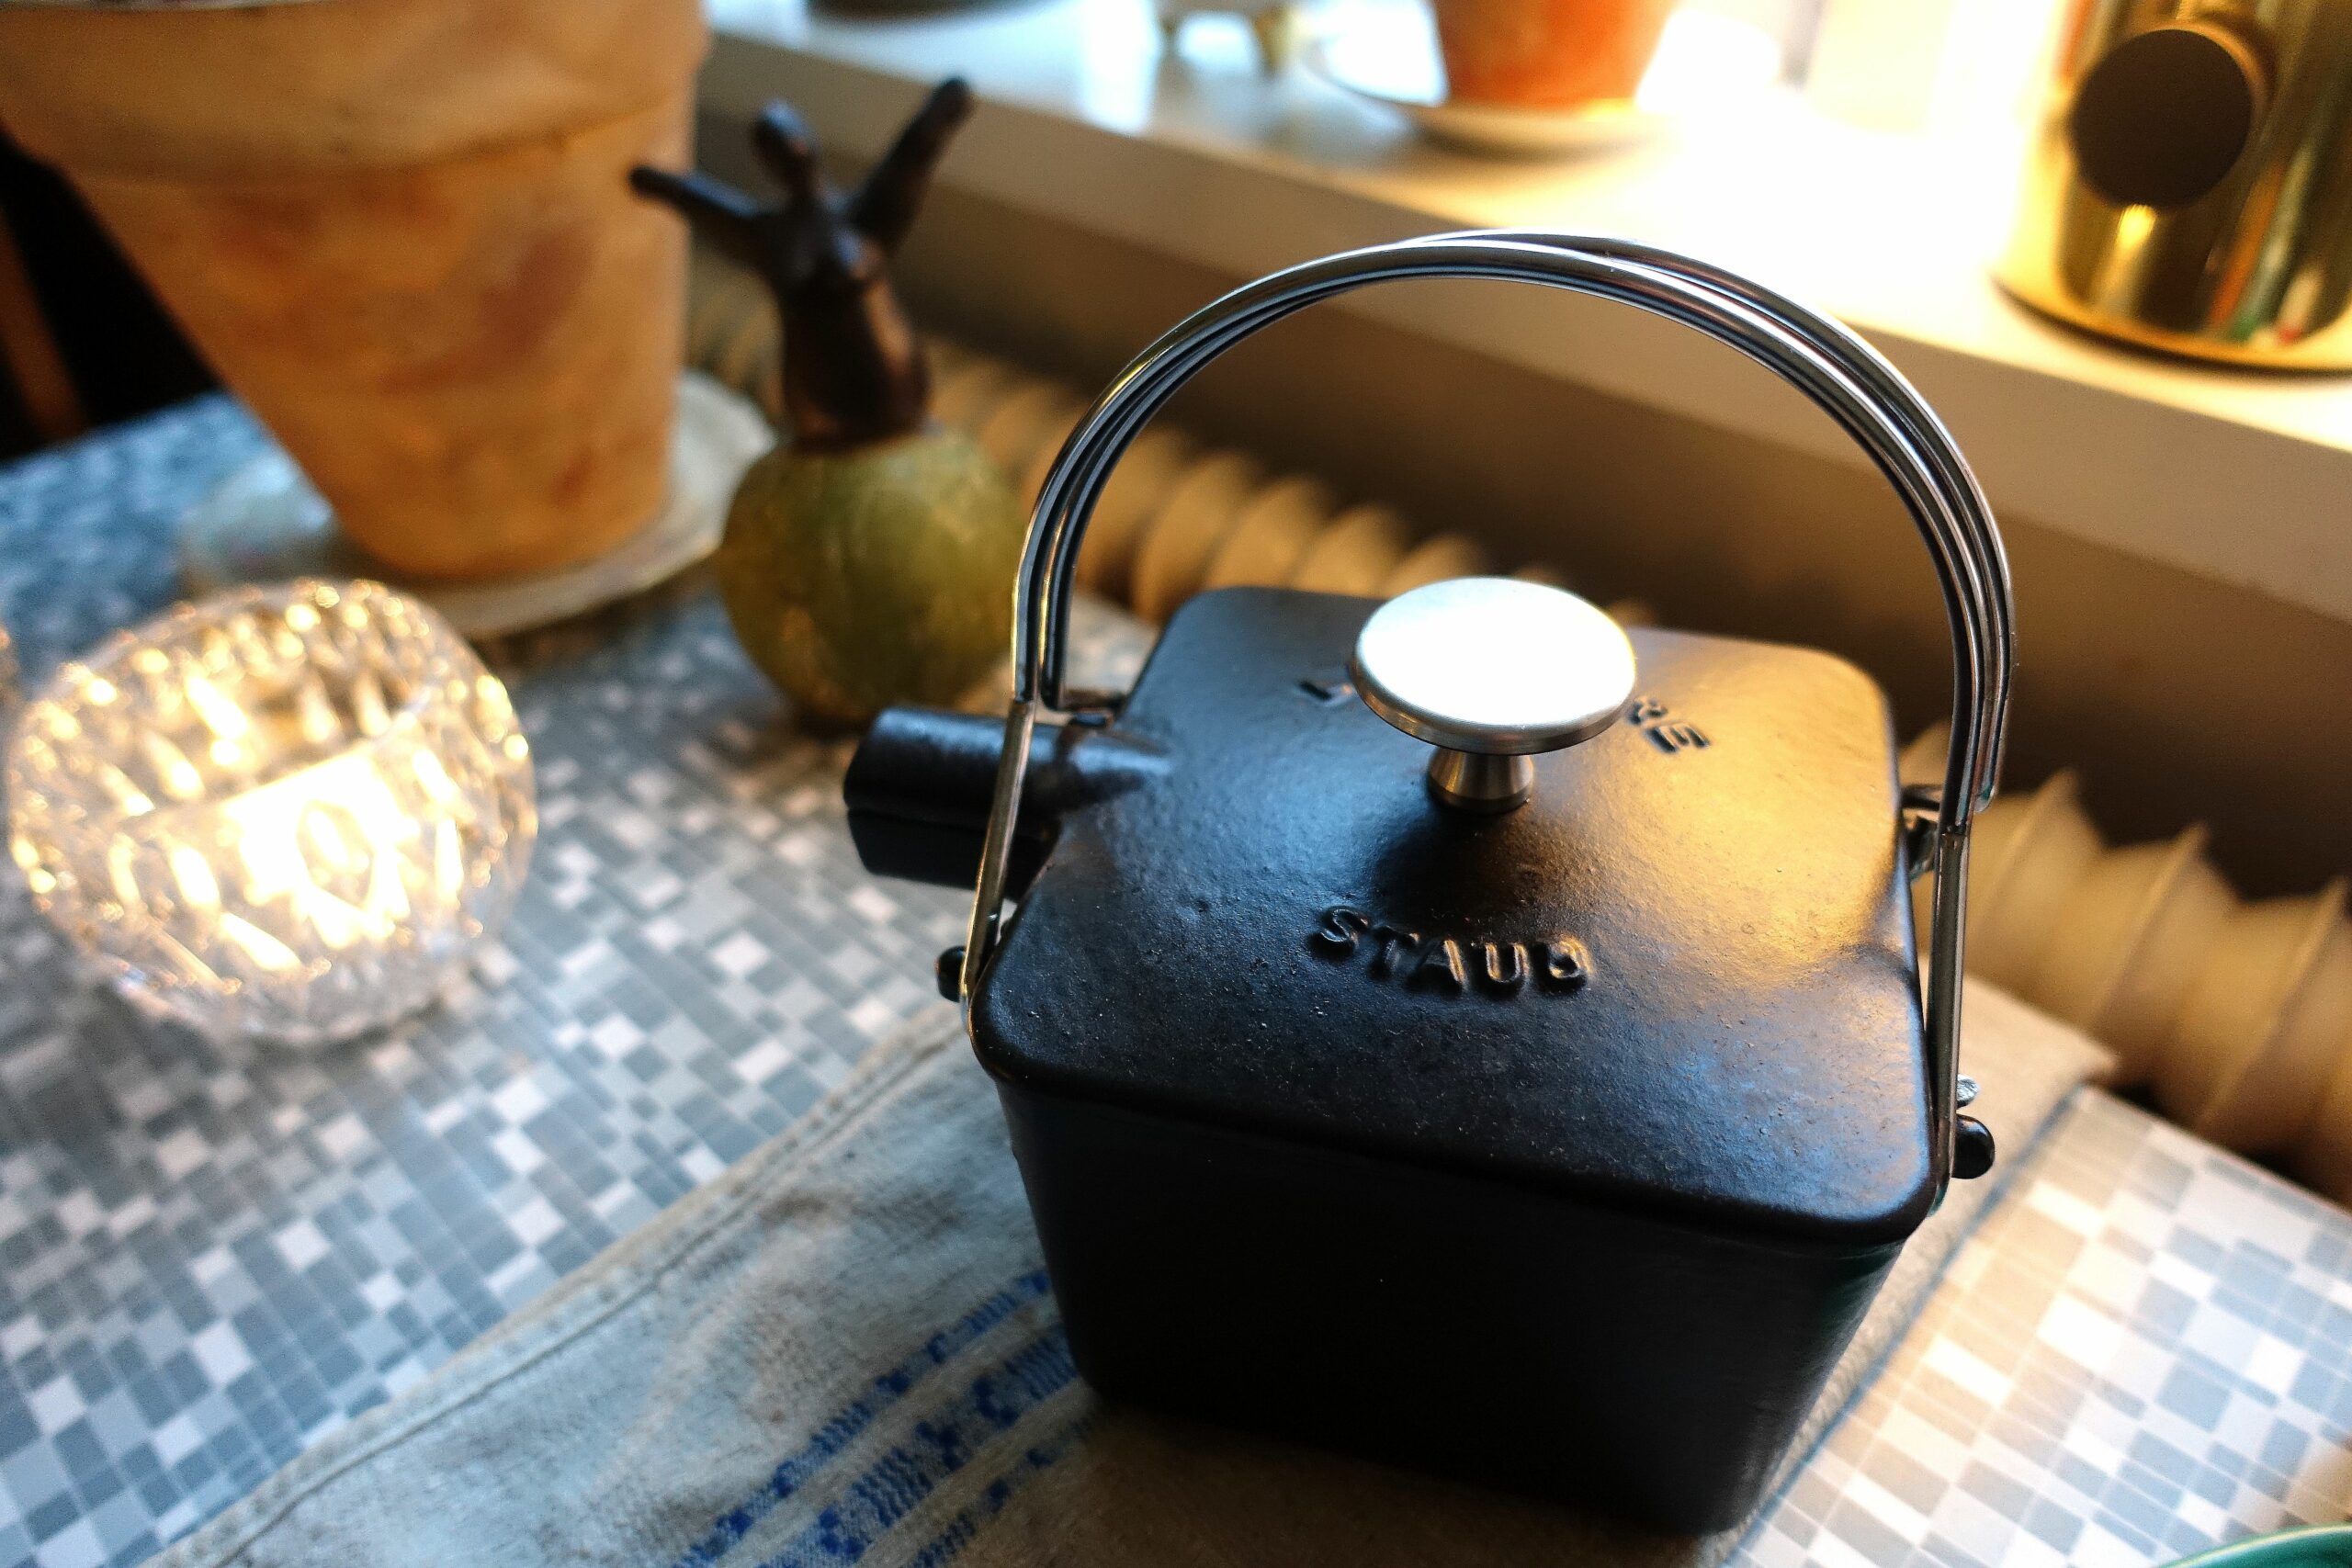 Buy Staub Cast Iron - Tea Kettles Tea pot